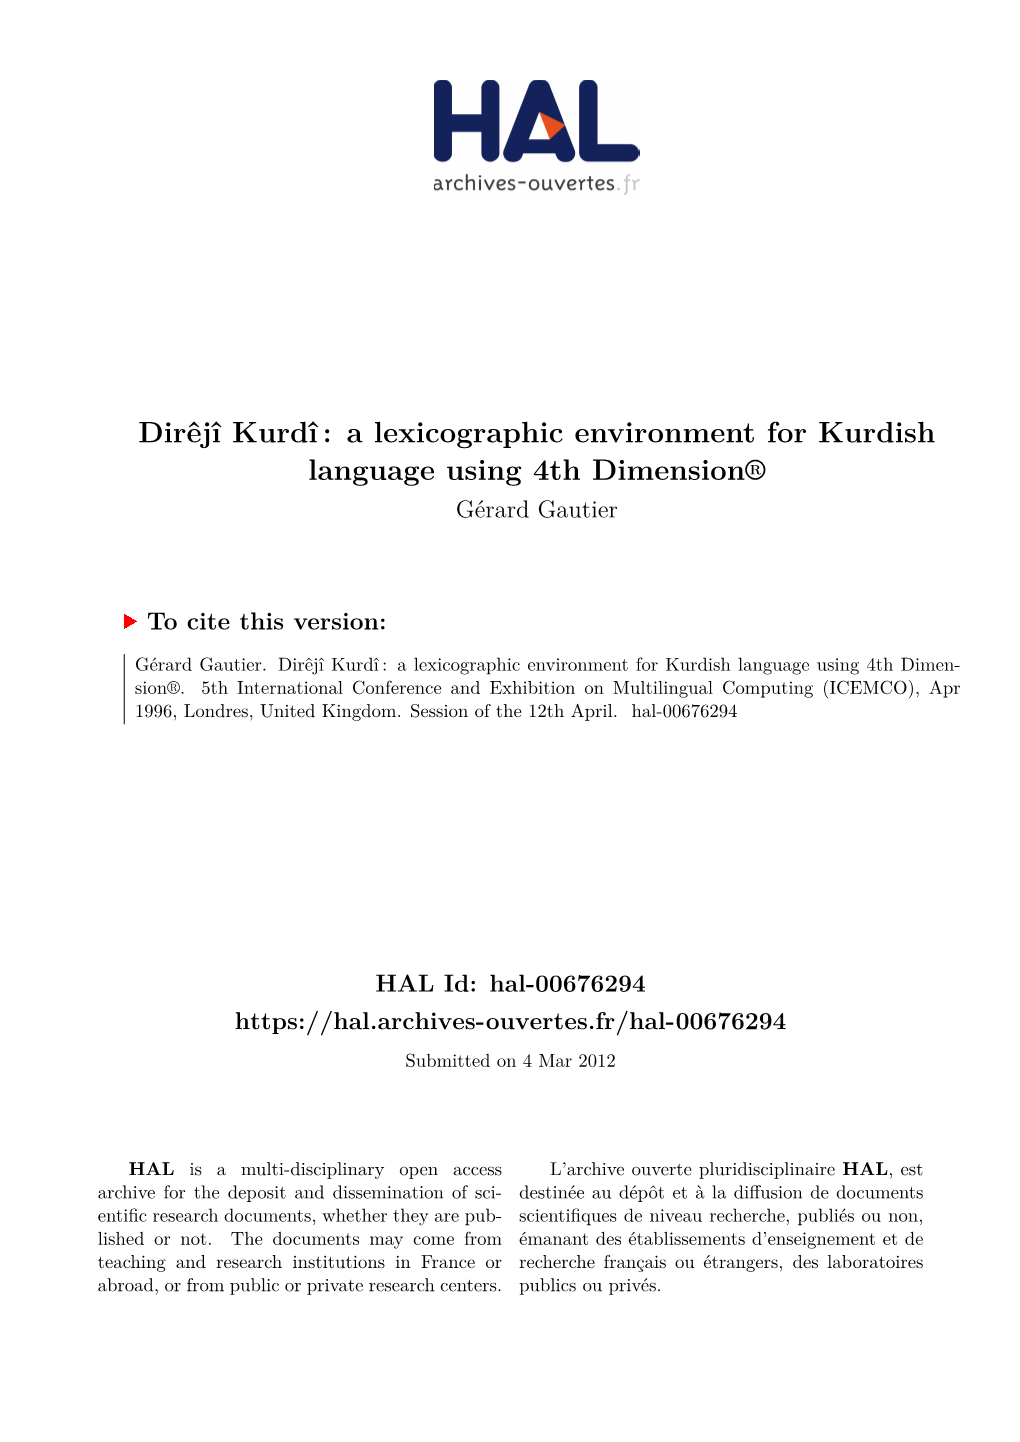 Dirêjî Kurdî: a Lexicographic Environment for Kurdish Language